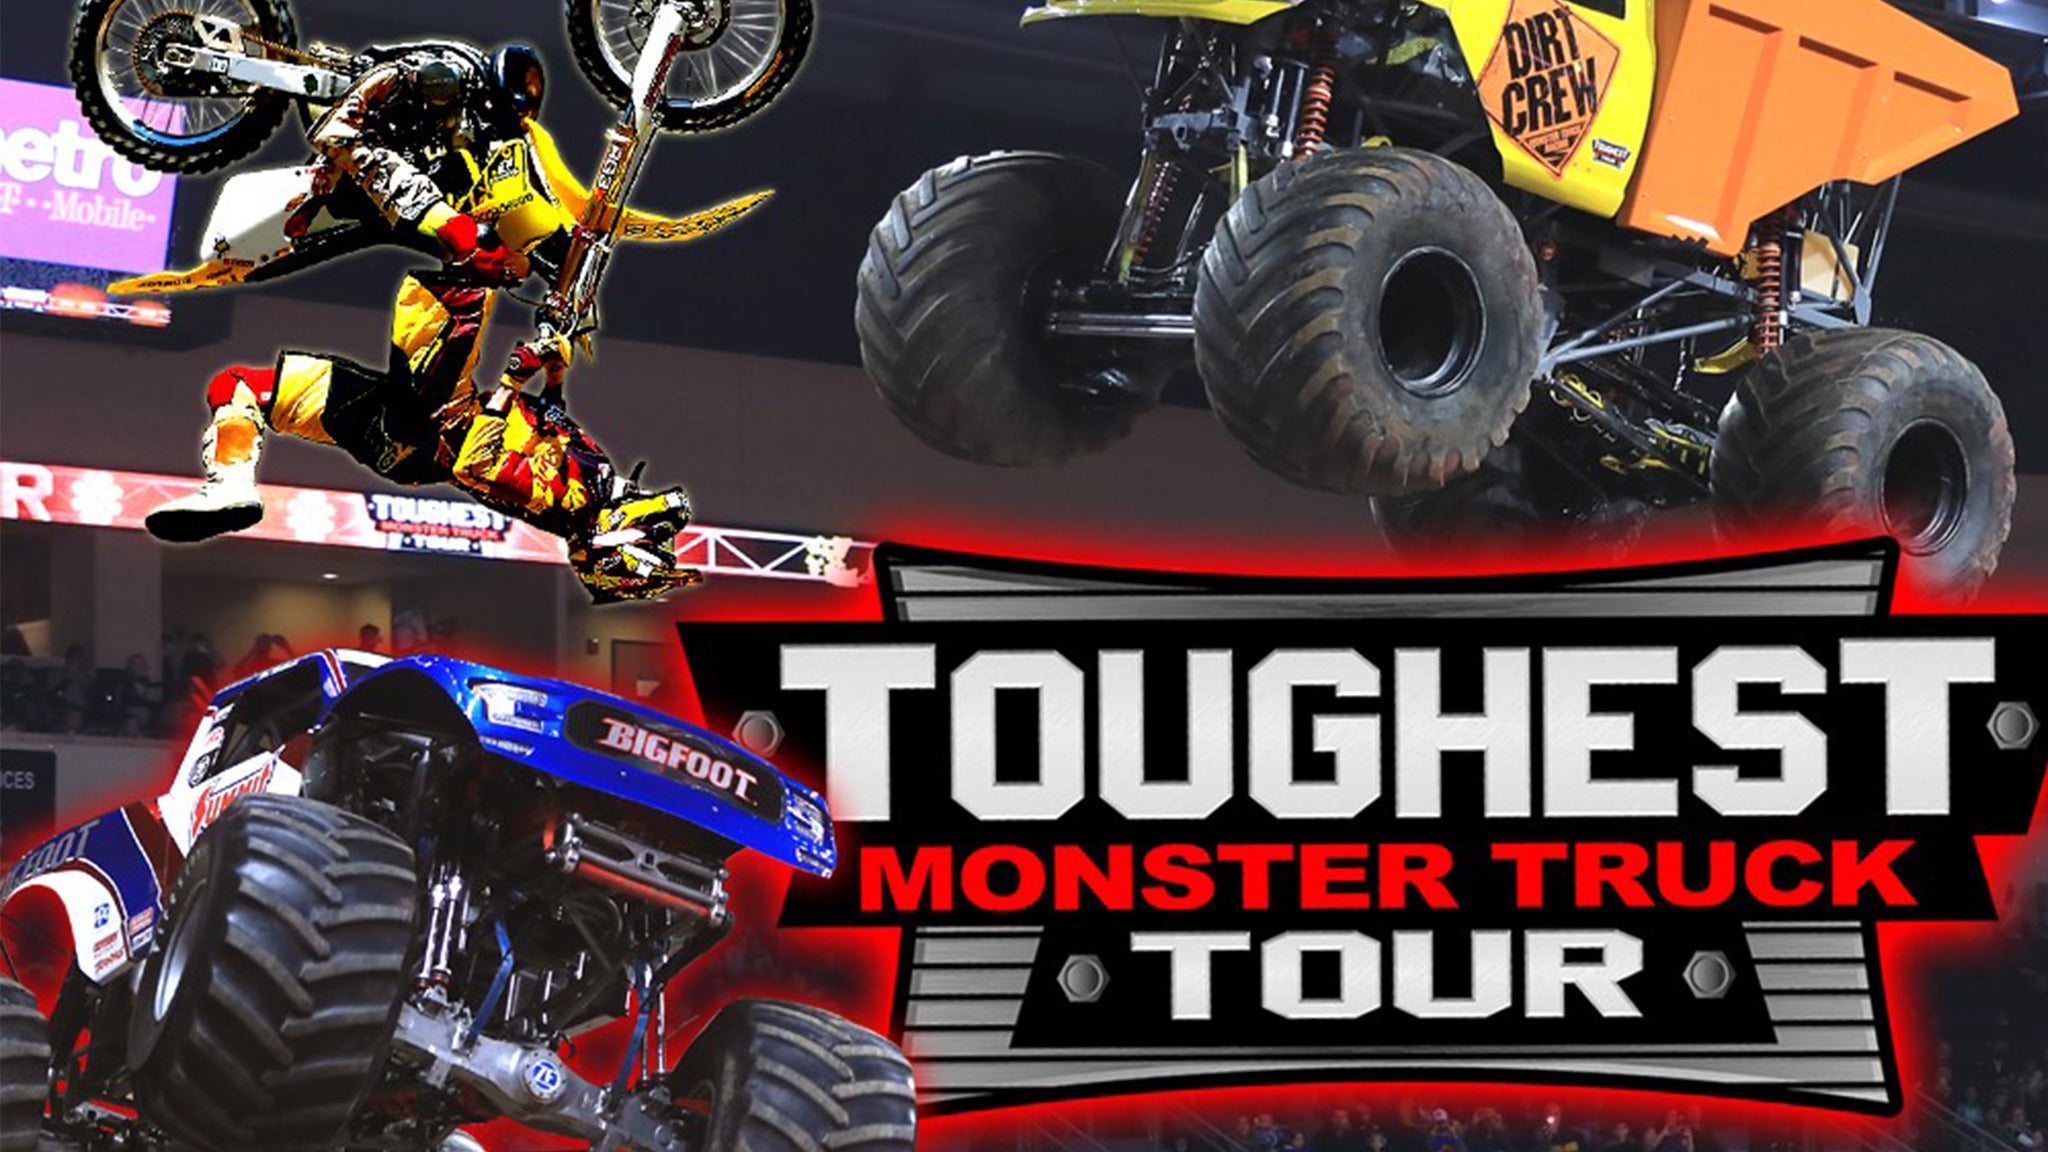 Toughest Monster Truck Tour at Alerus Center - Grand Forks, ND 58201